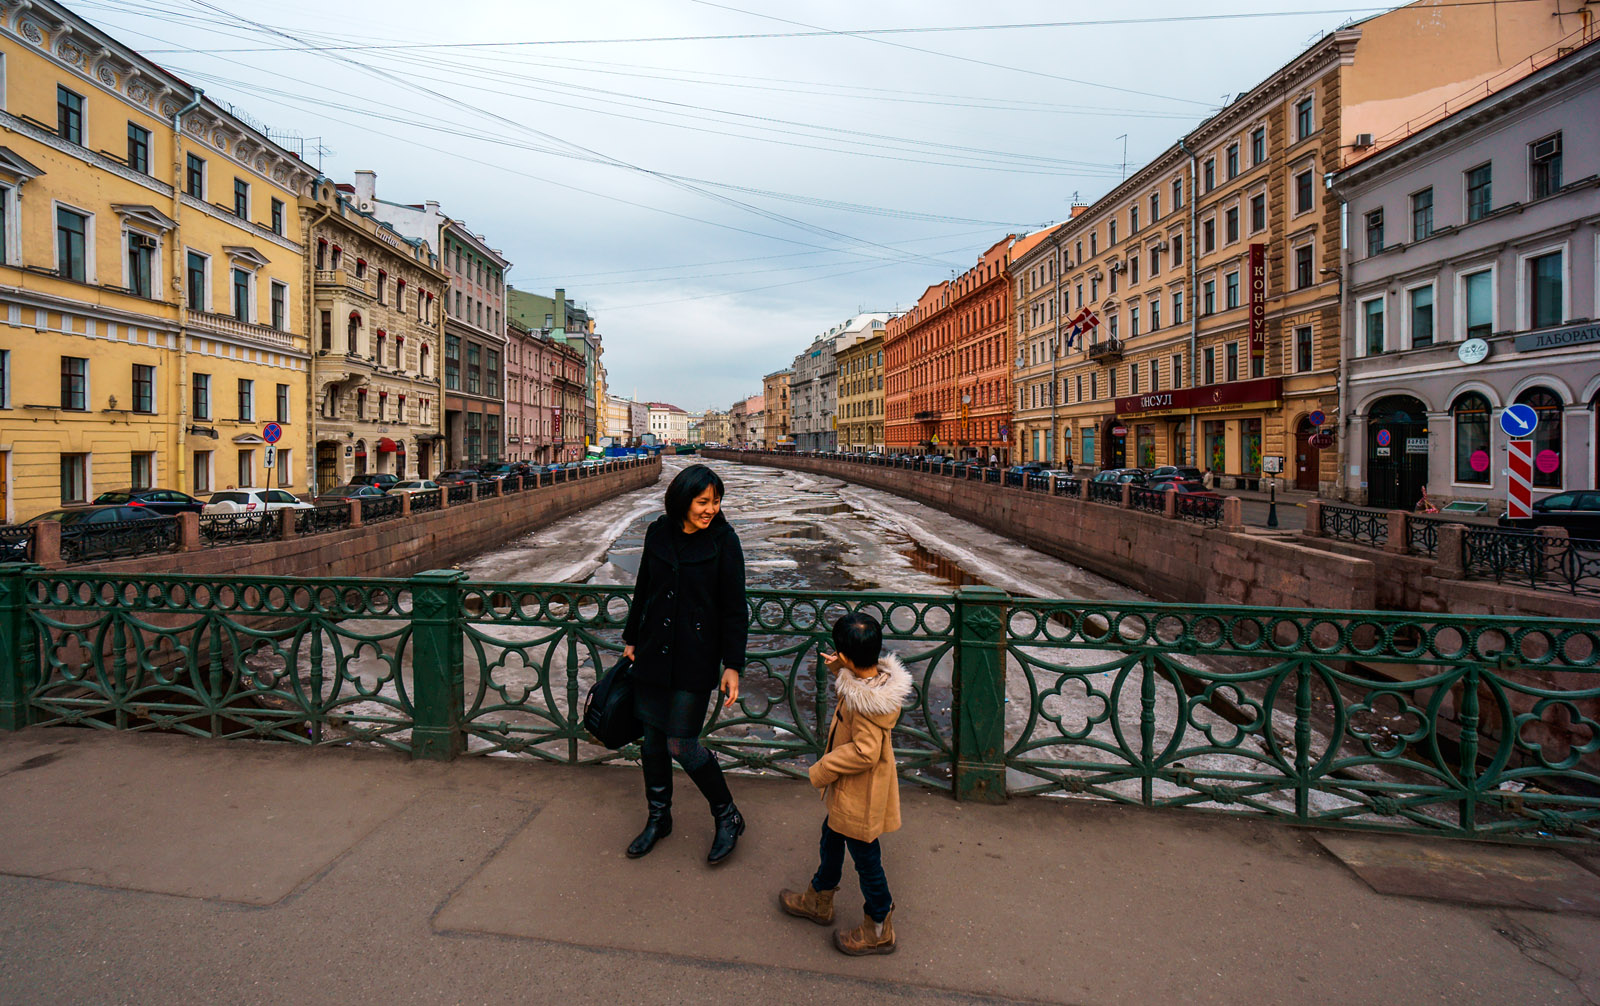 St Petersburg, Russia, Apr 2013